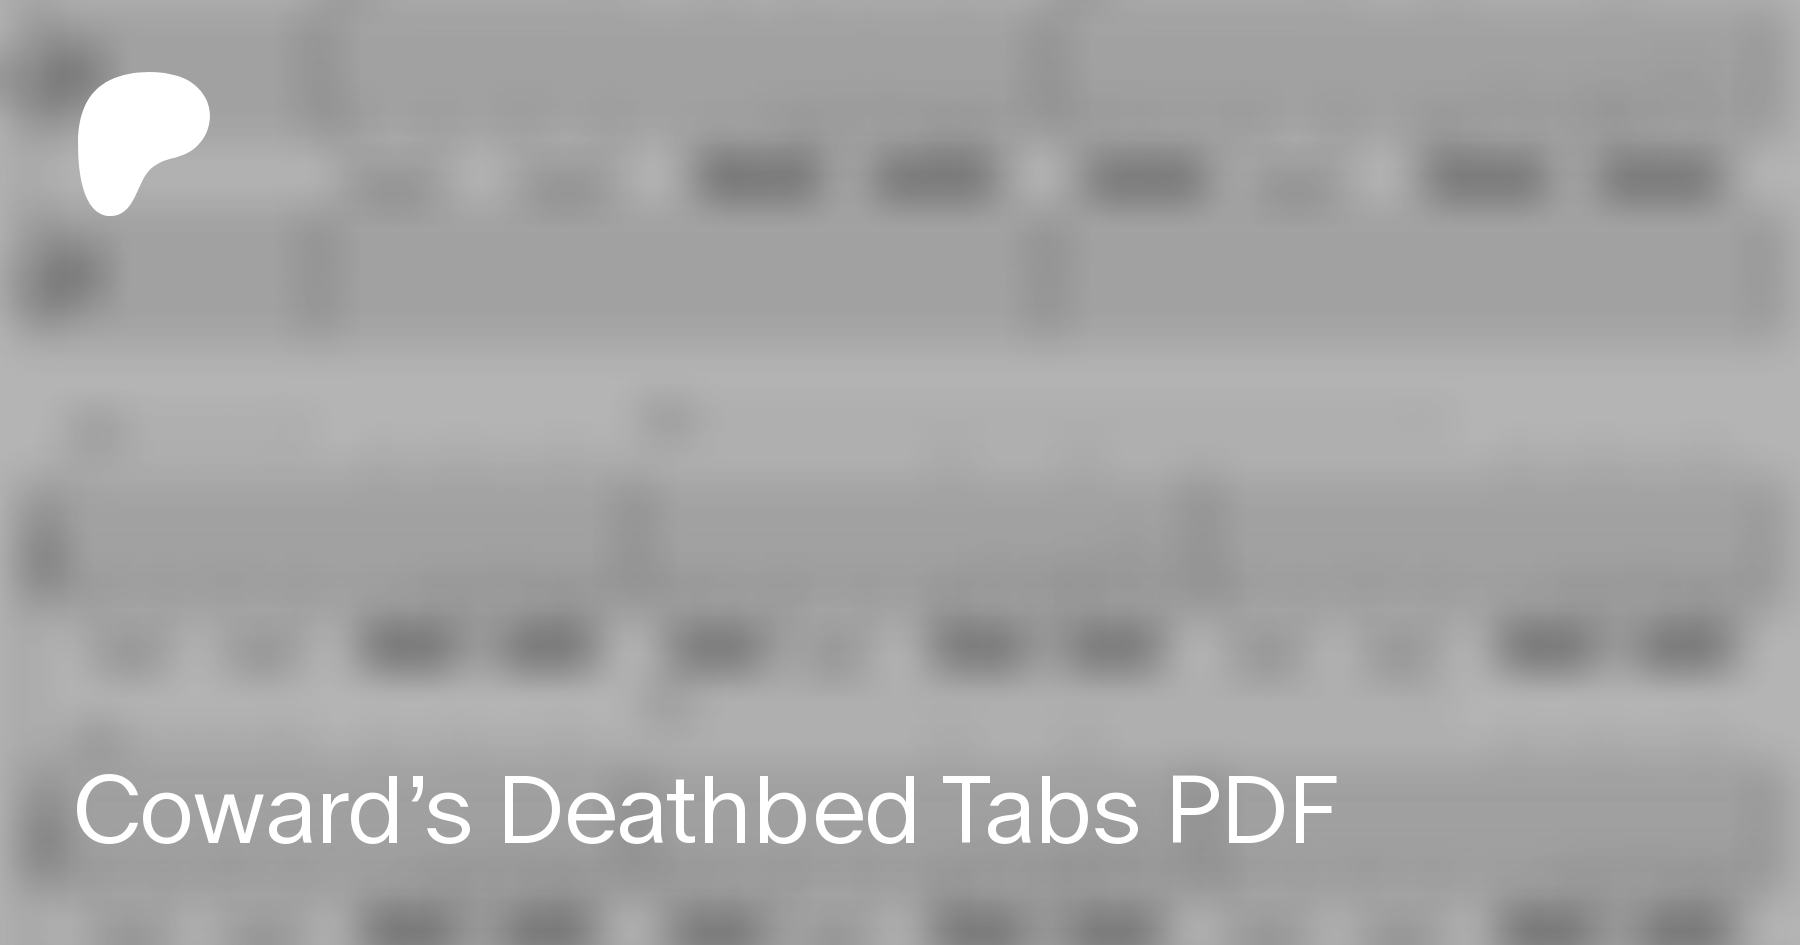 Coward's Deathbed Tabs PDF